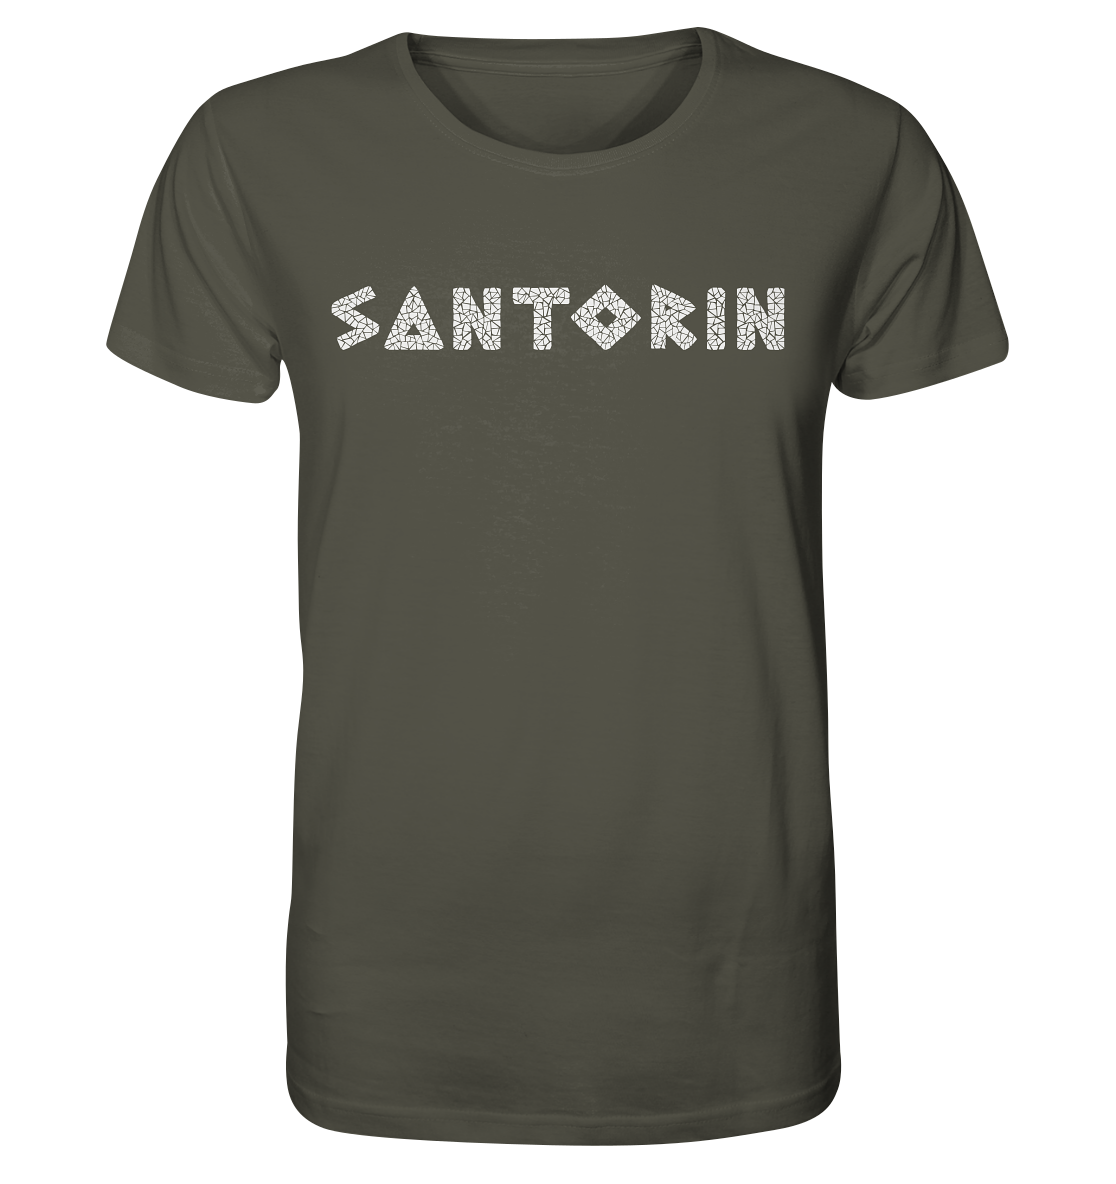 Santorin Mosaik - Organic Shirt